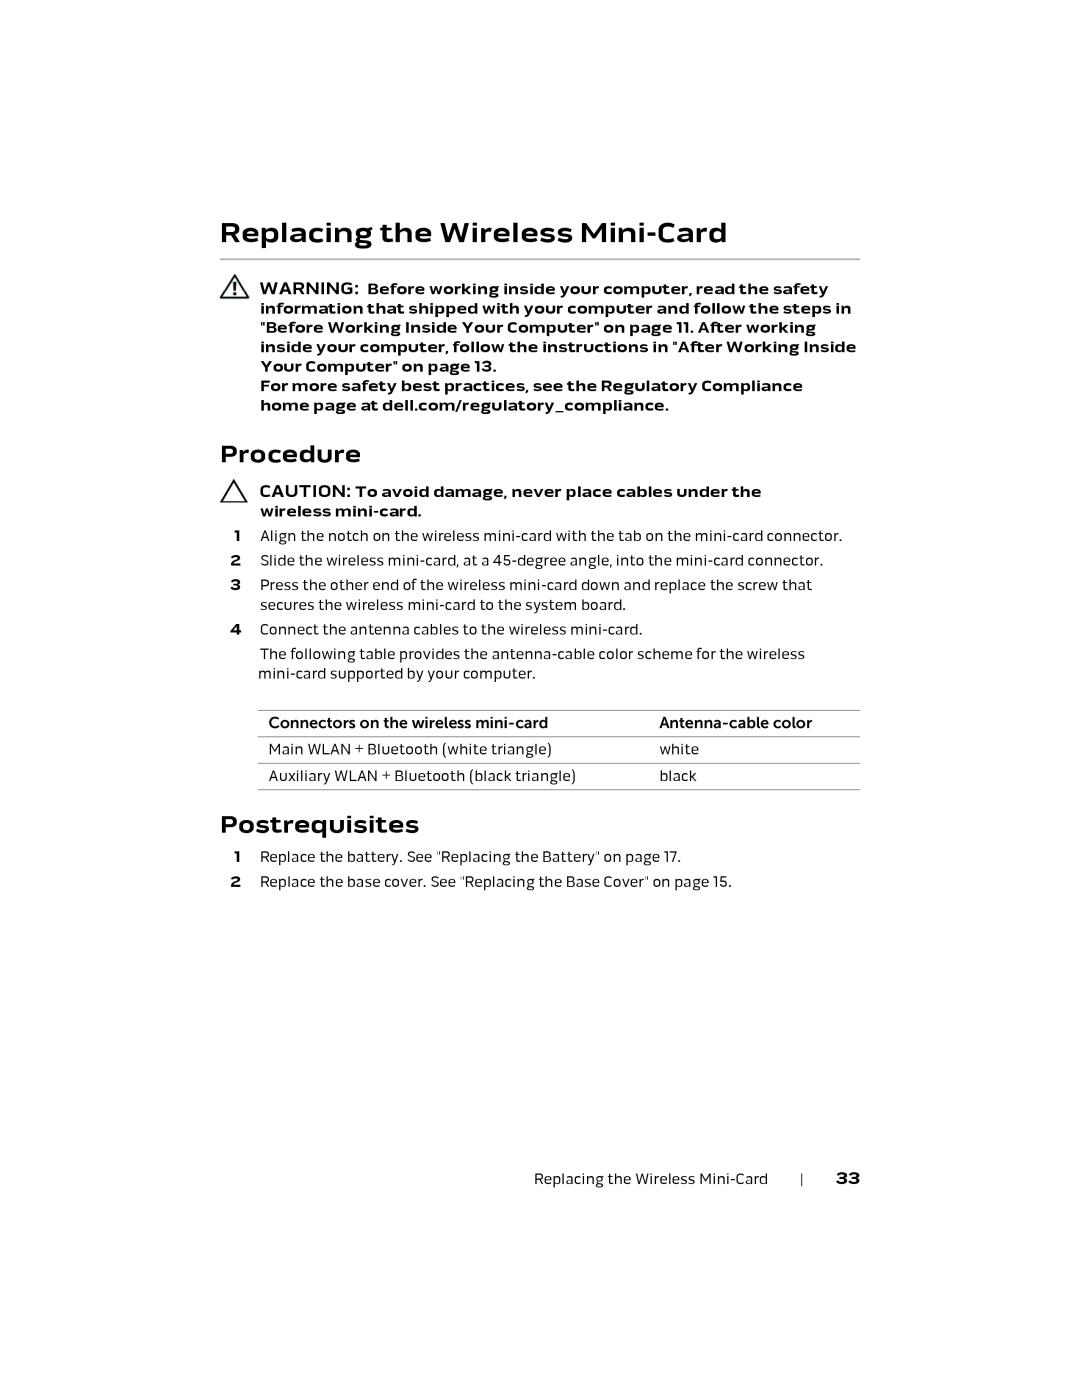 Alienware 17 R1, P18E owner manual Replacing the Wireless Mini-Card, Procedure, Postrequisites 